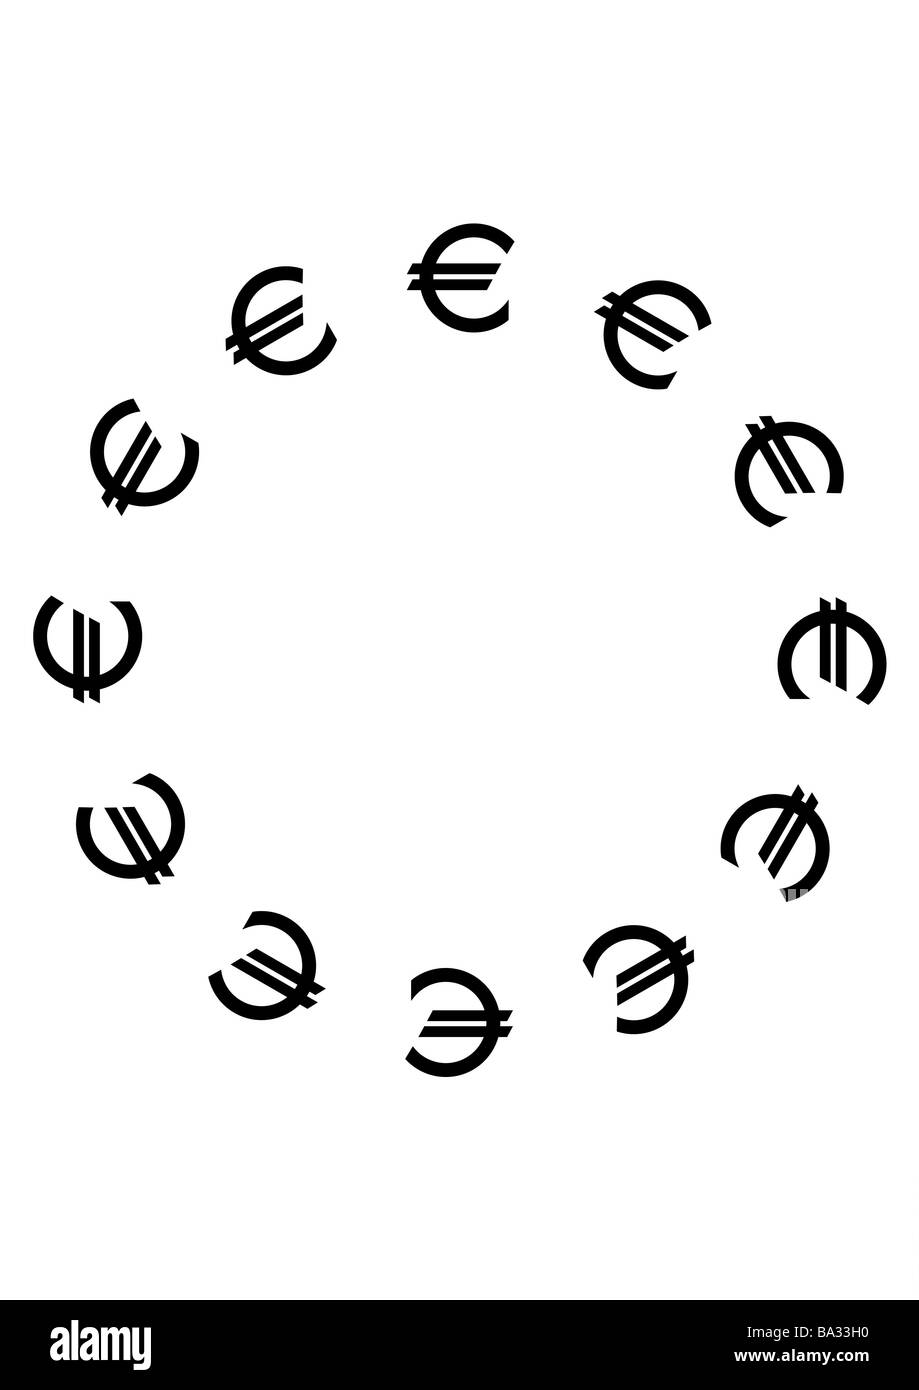 Computer-graphics monetary-signs Euro Europe currency Euro-signs monetary-symbols symbol economy finances finance-market money Stock Photo